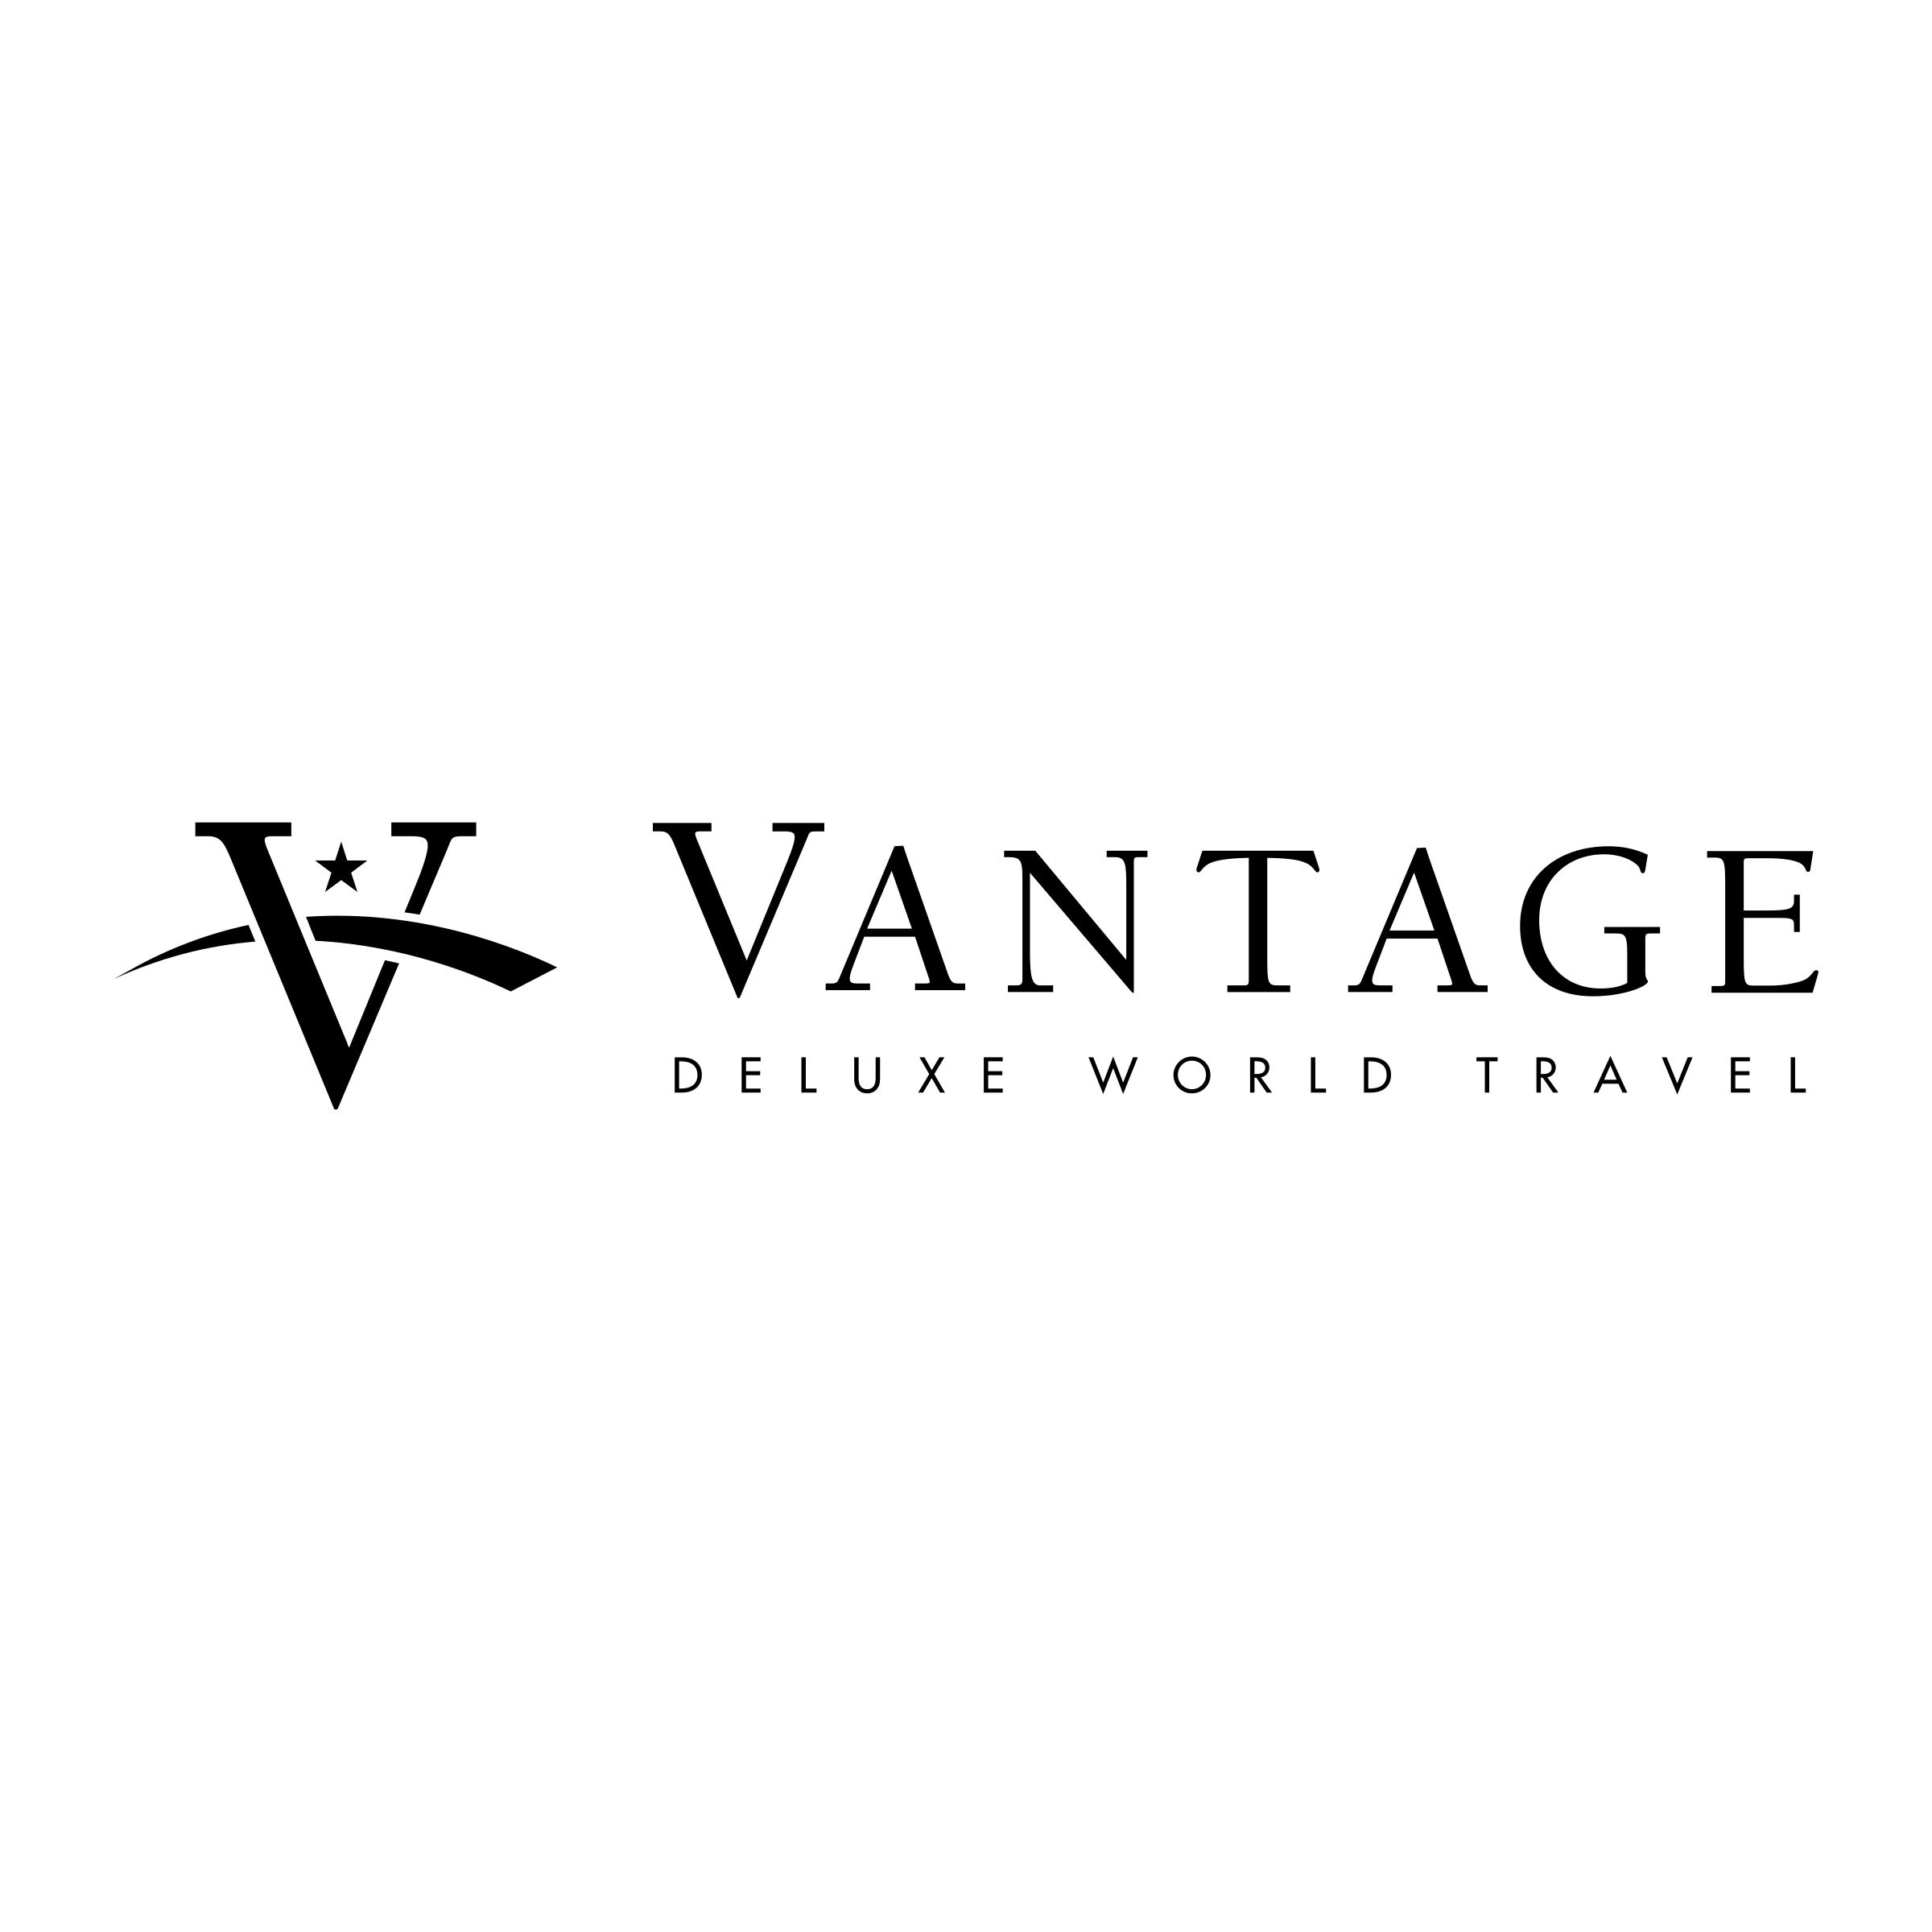 Vantage Logo - Vantage Logo PNG Transparent & SVG Vector - Freebie Supply